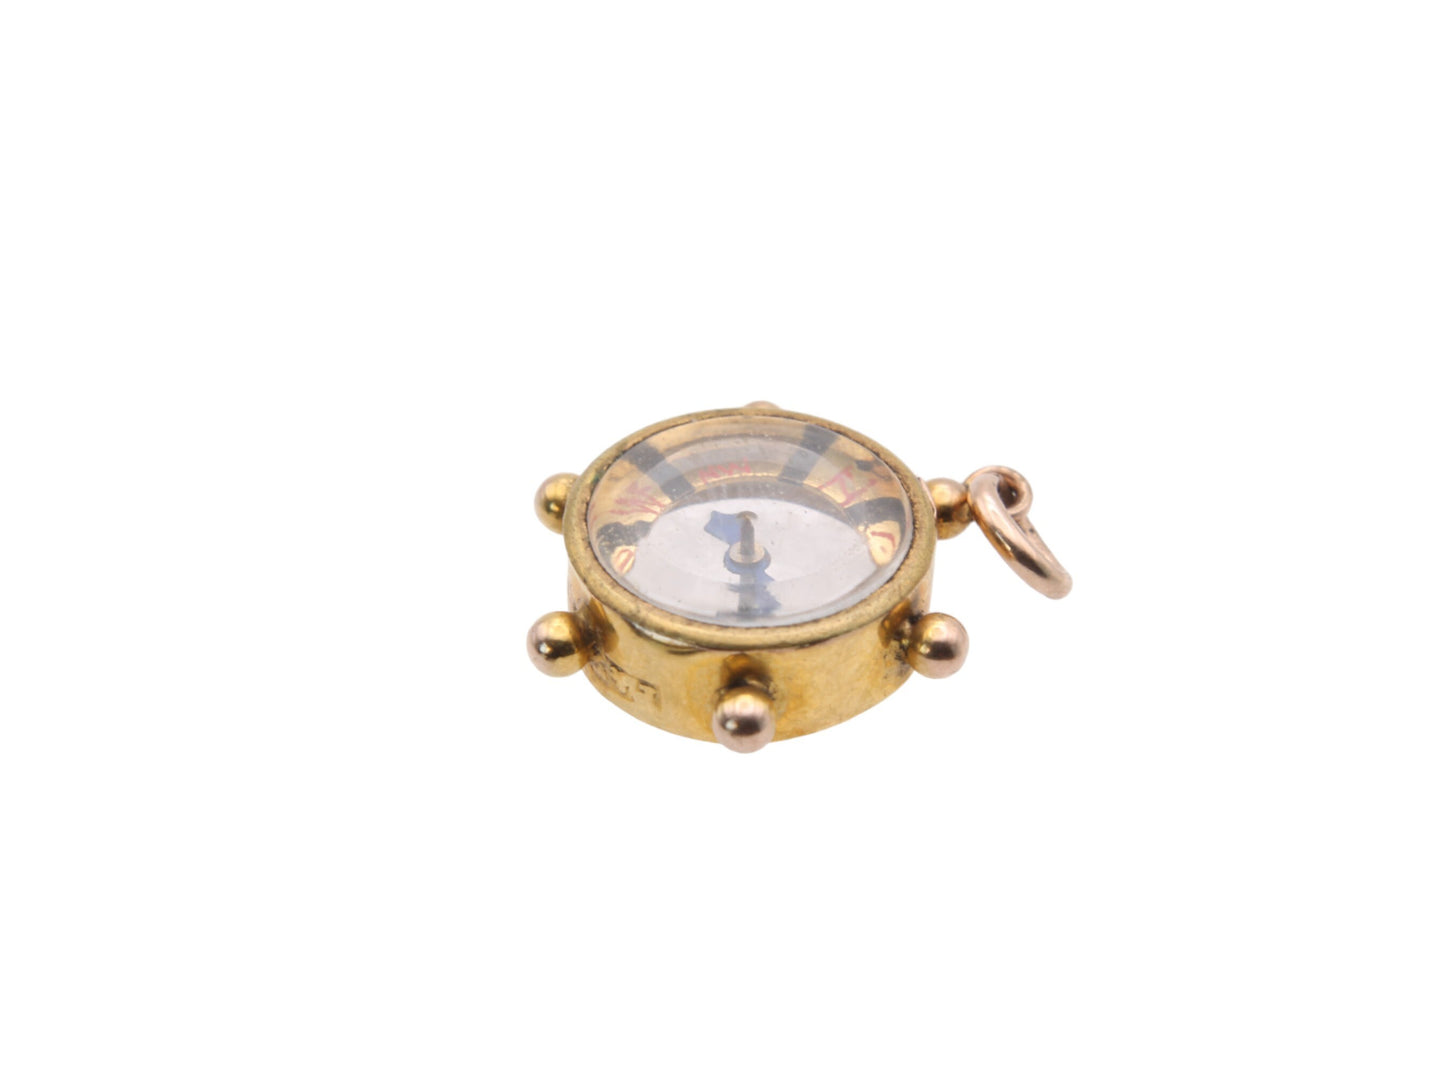 Antique 9ct Gold Nautical Compass Pendant